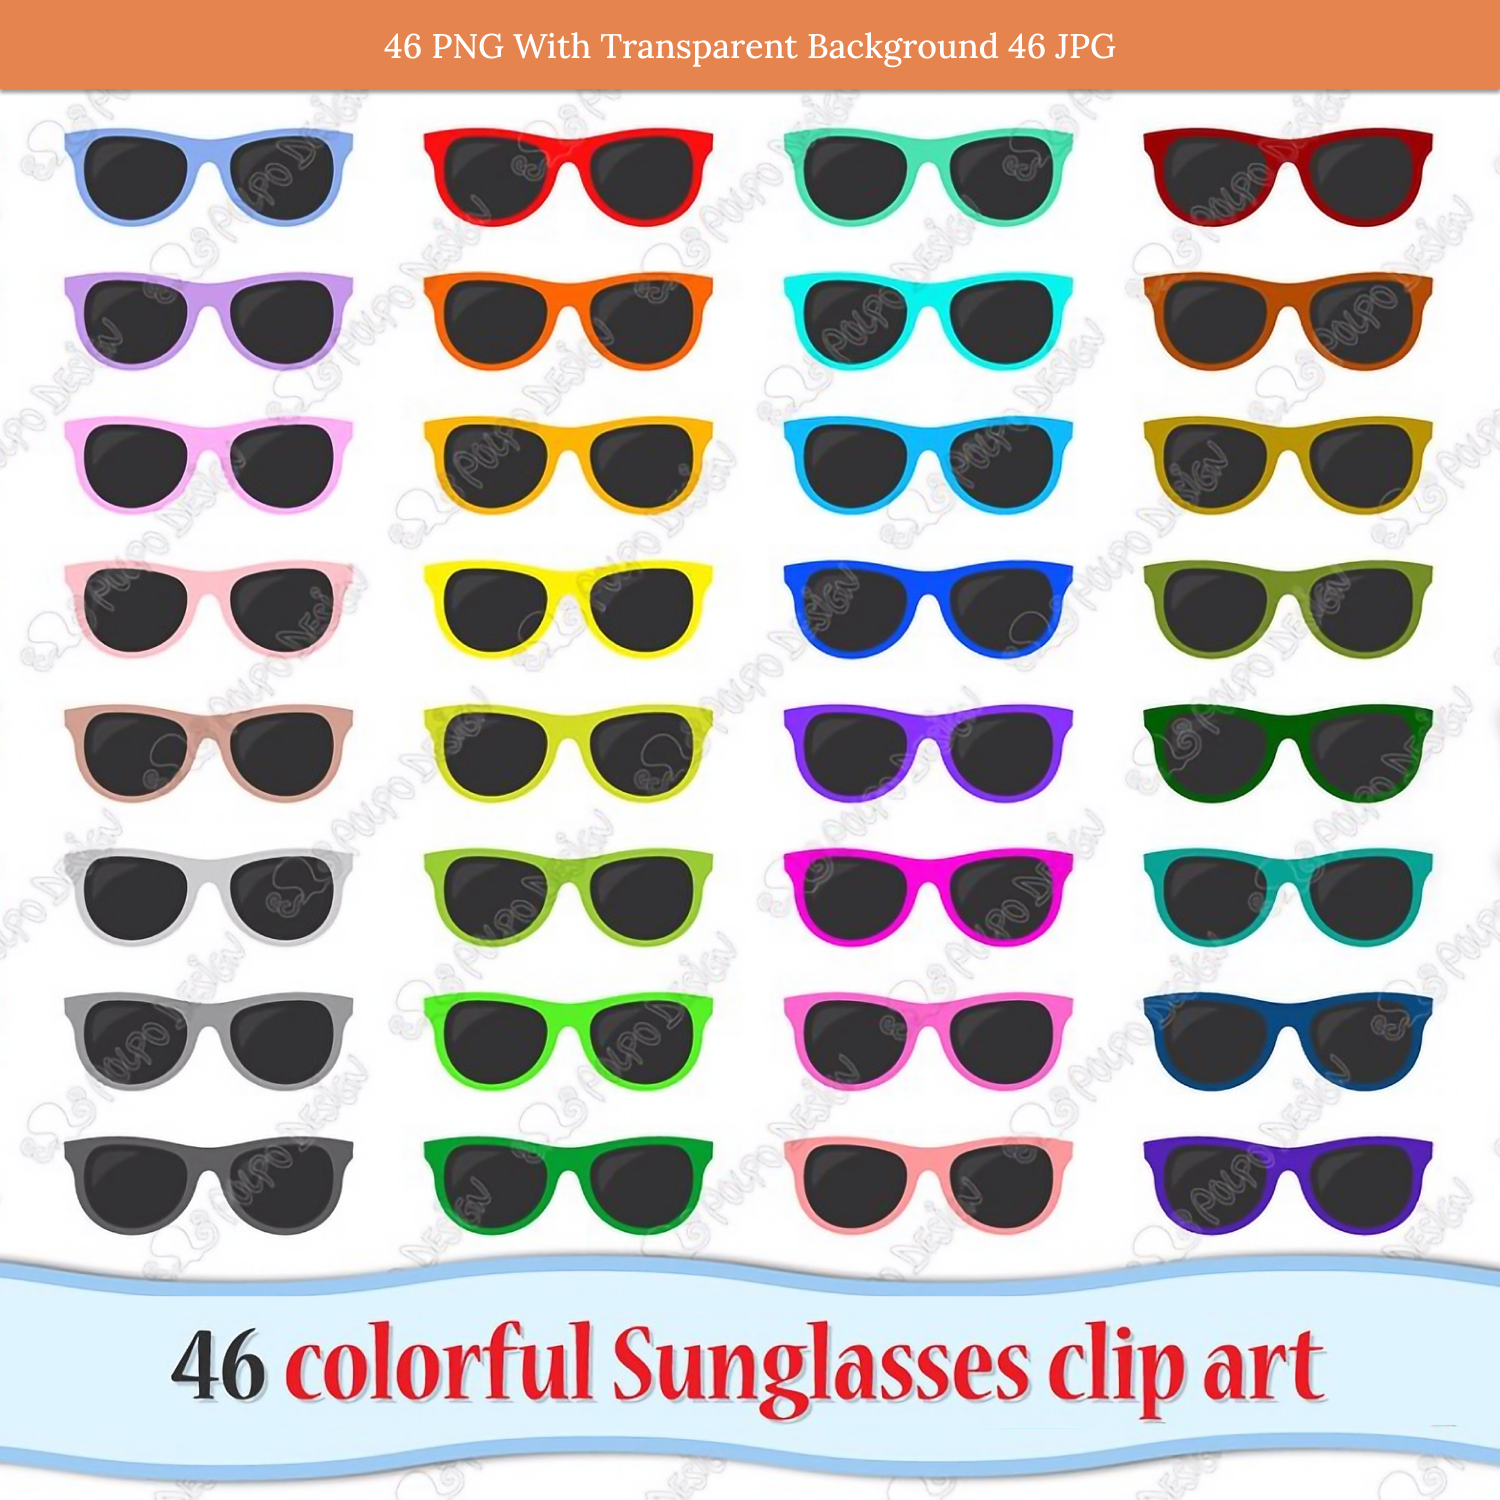 Colorful Sunglasses Clipart Main Cover.